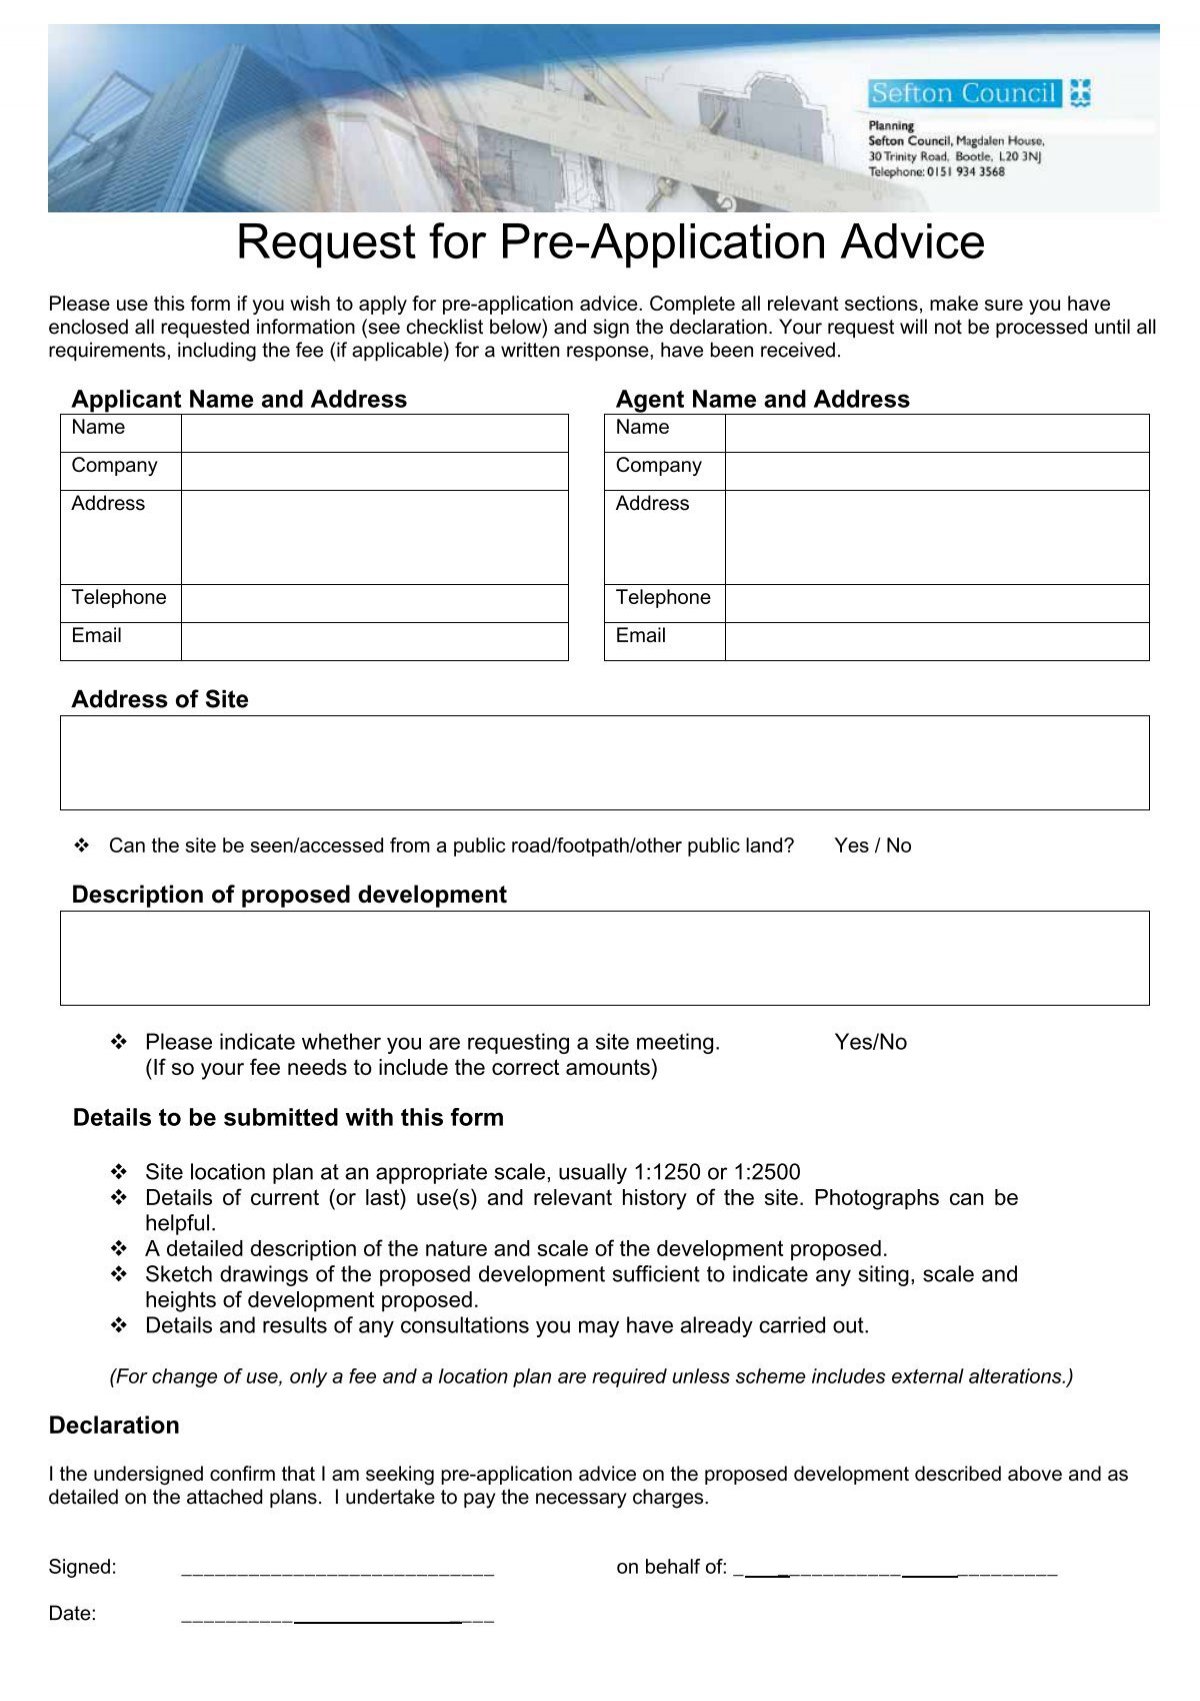 Request for Pre-Application Advice - Sefton Council